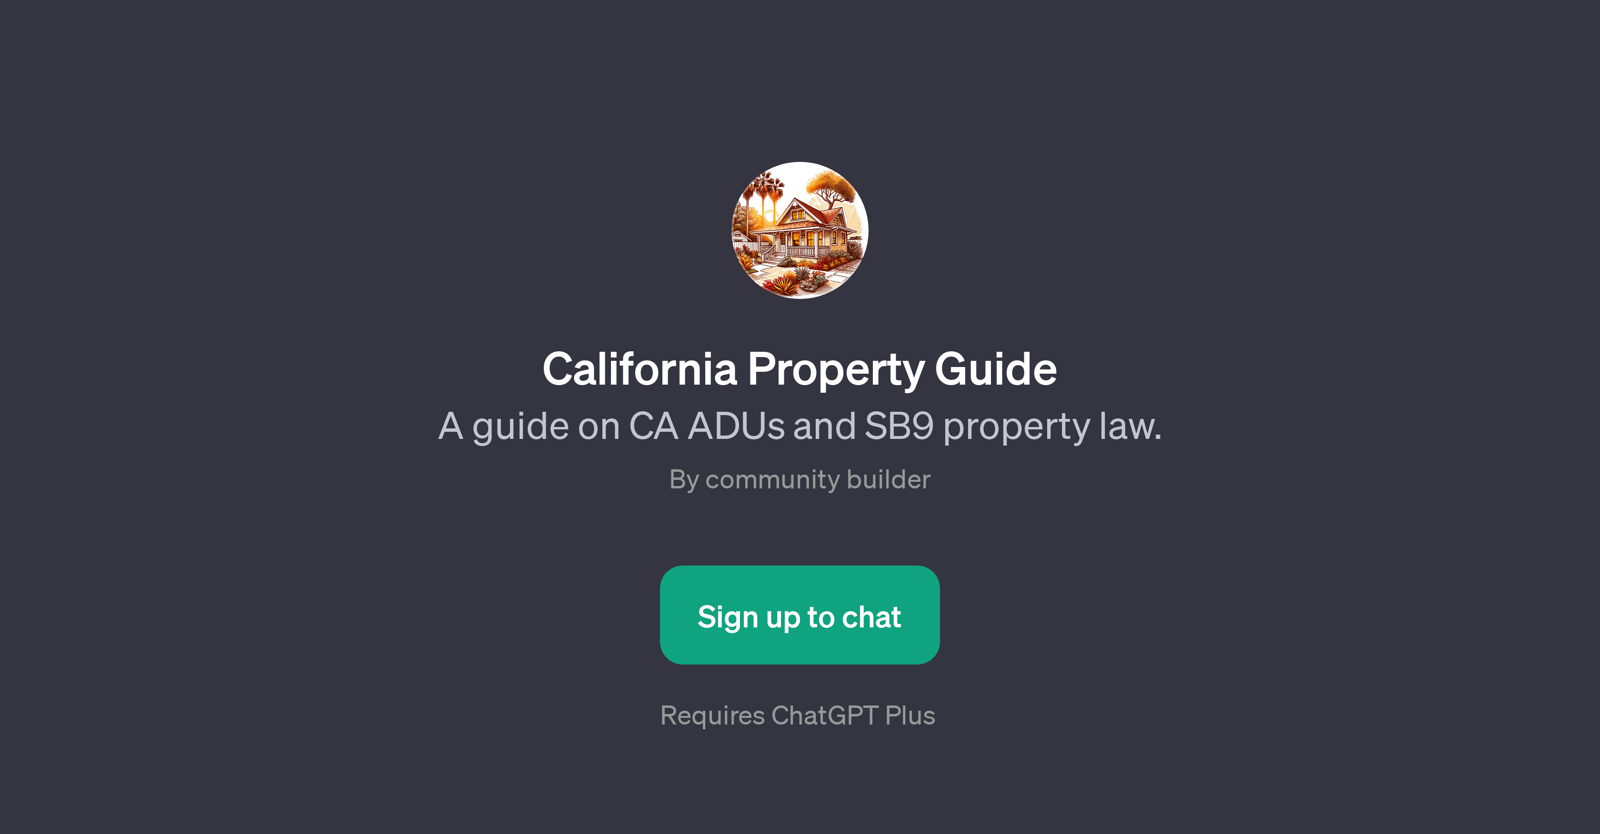 California Property Guide website